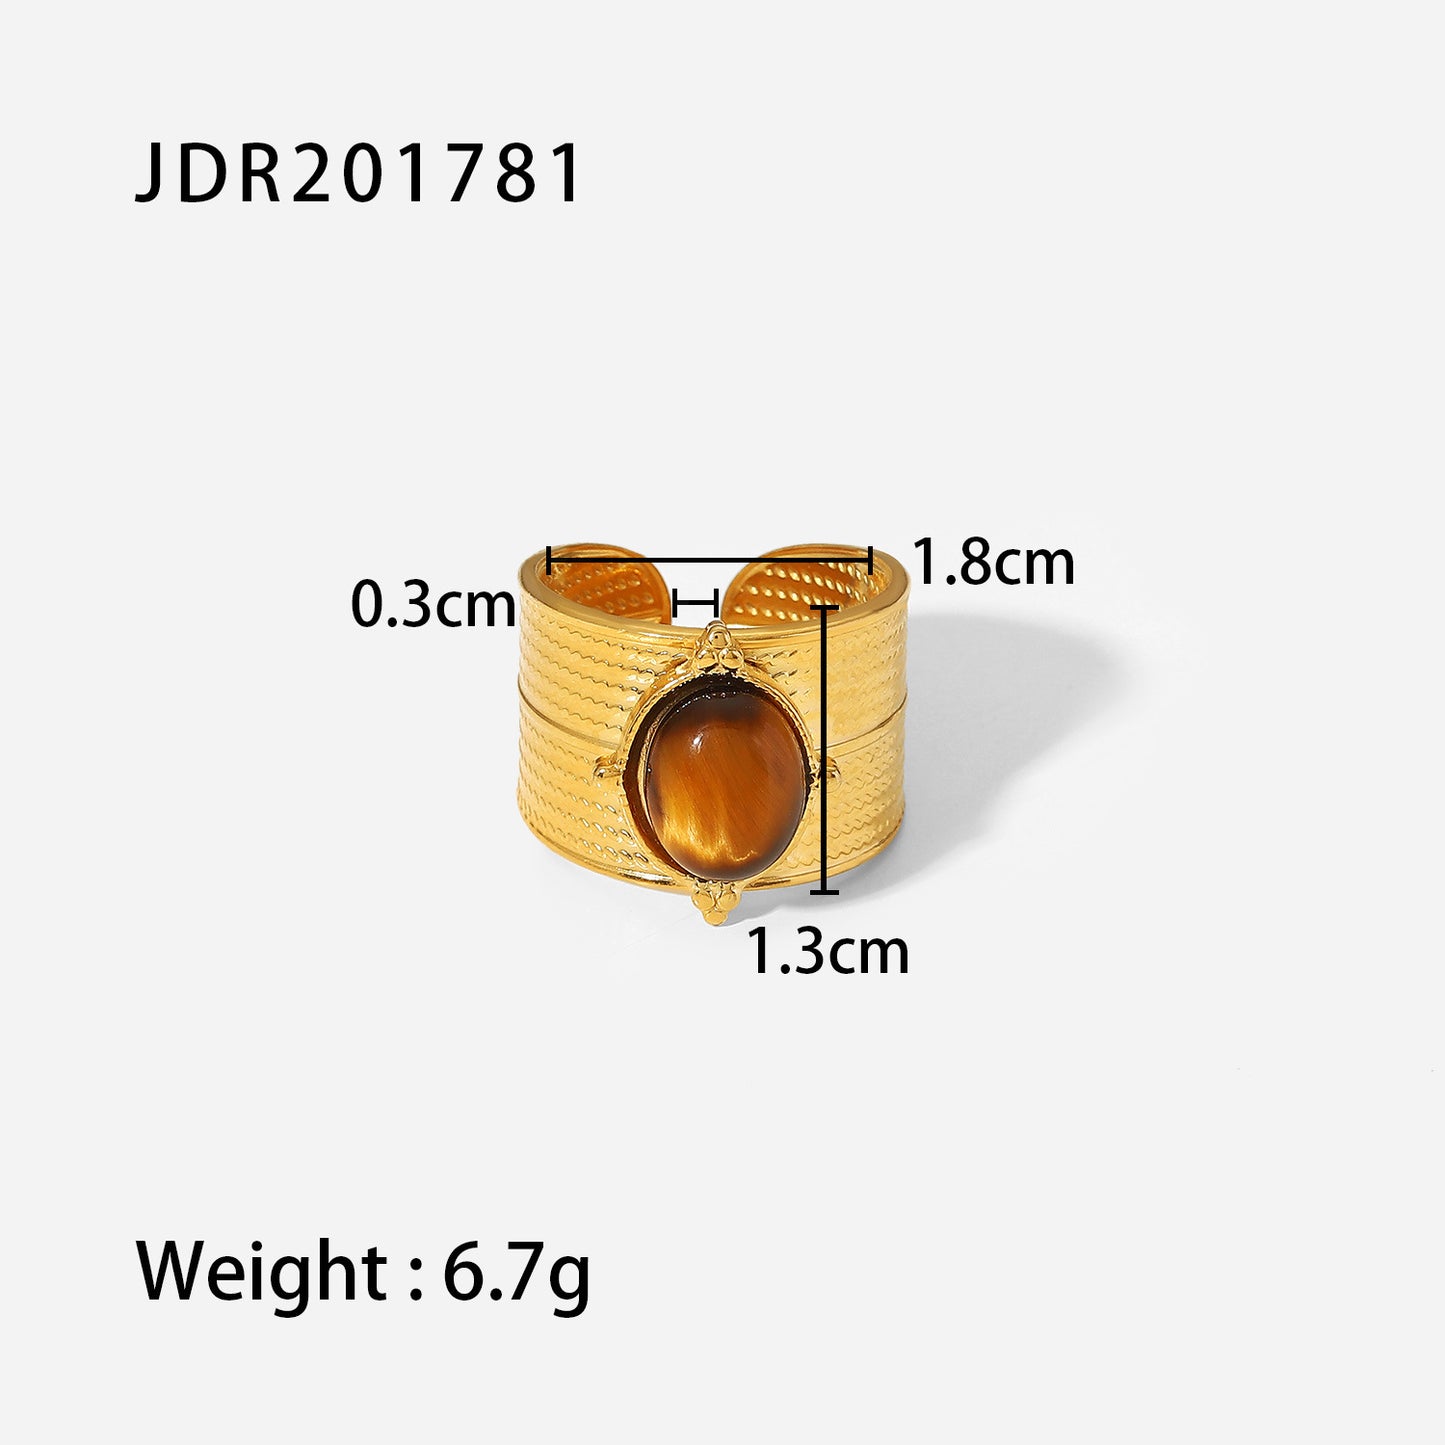 D廠【JDR201781,JDR201781-S】不銹鋼18k金復古高品質珠寶戒指23.06.W3